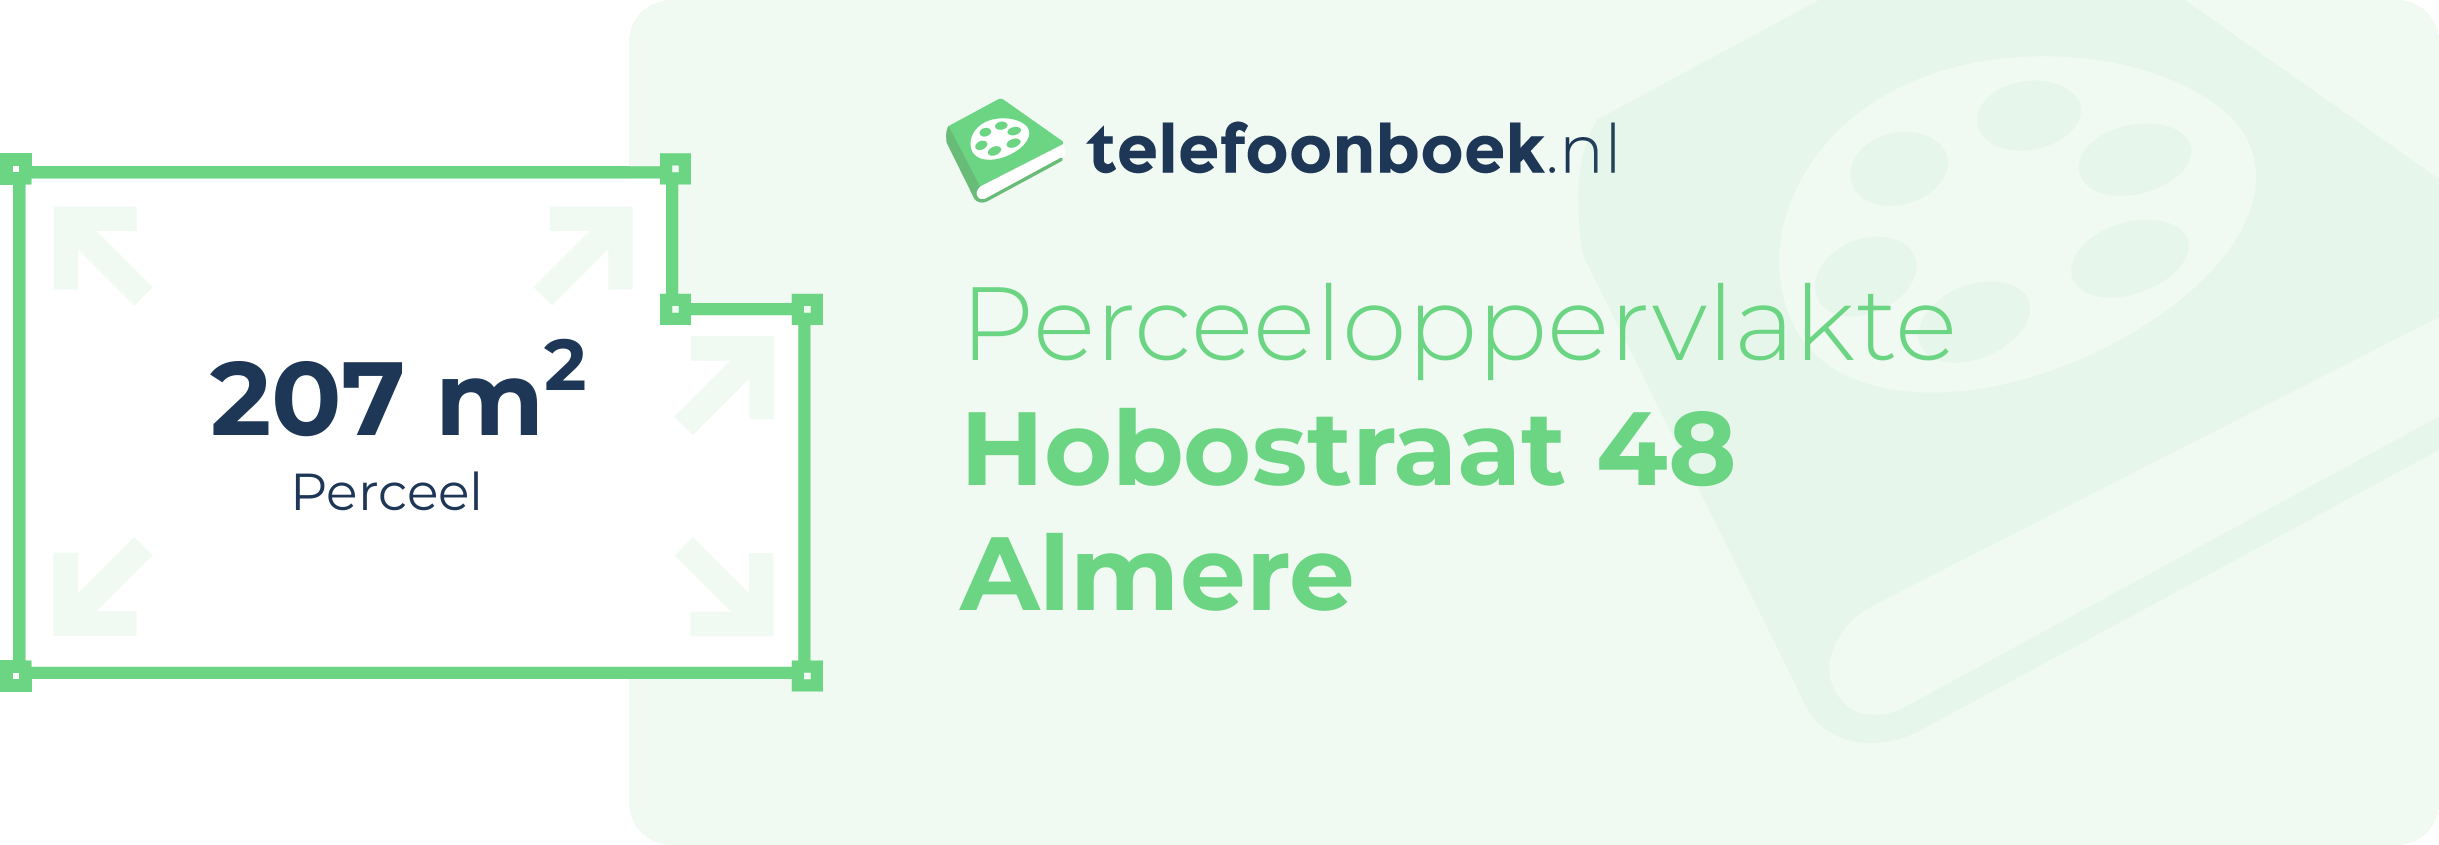 Perceeloppervlakte Hobostraat 48 Almere